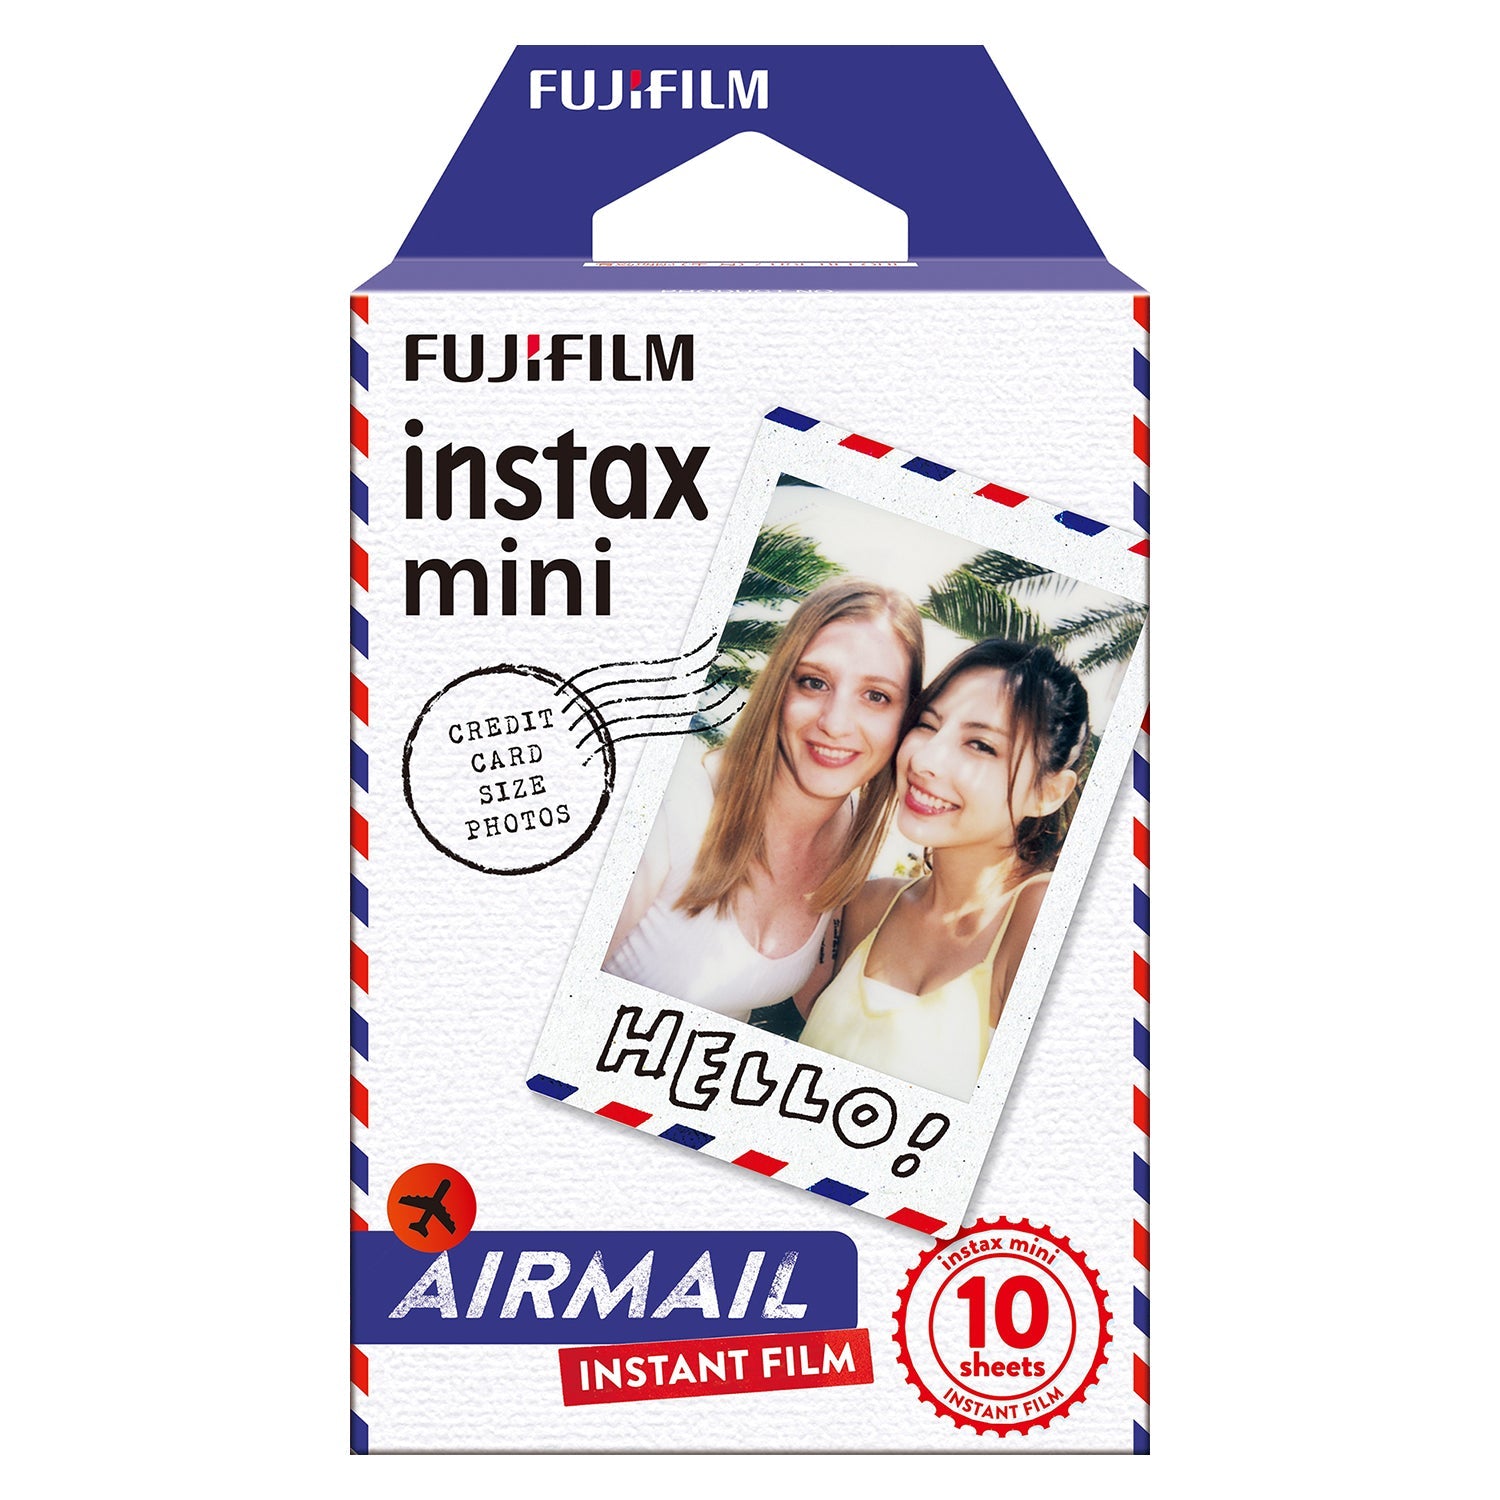 Fujifilm Instax Mini 10X1 airmail Instant Film with Instax Time Photo Album 64 Sheets (cobalt blue)